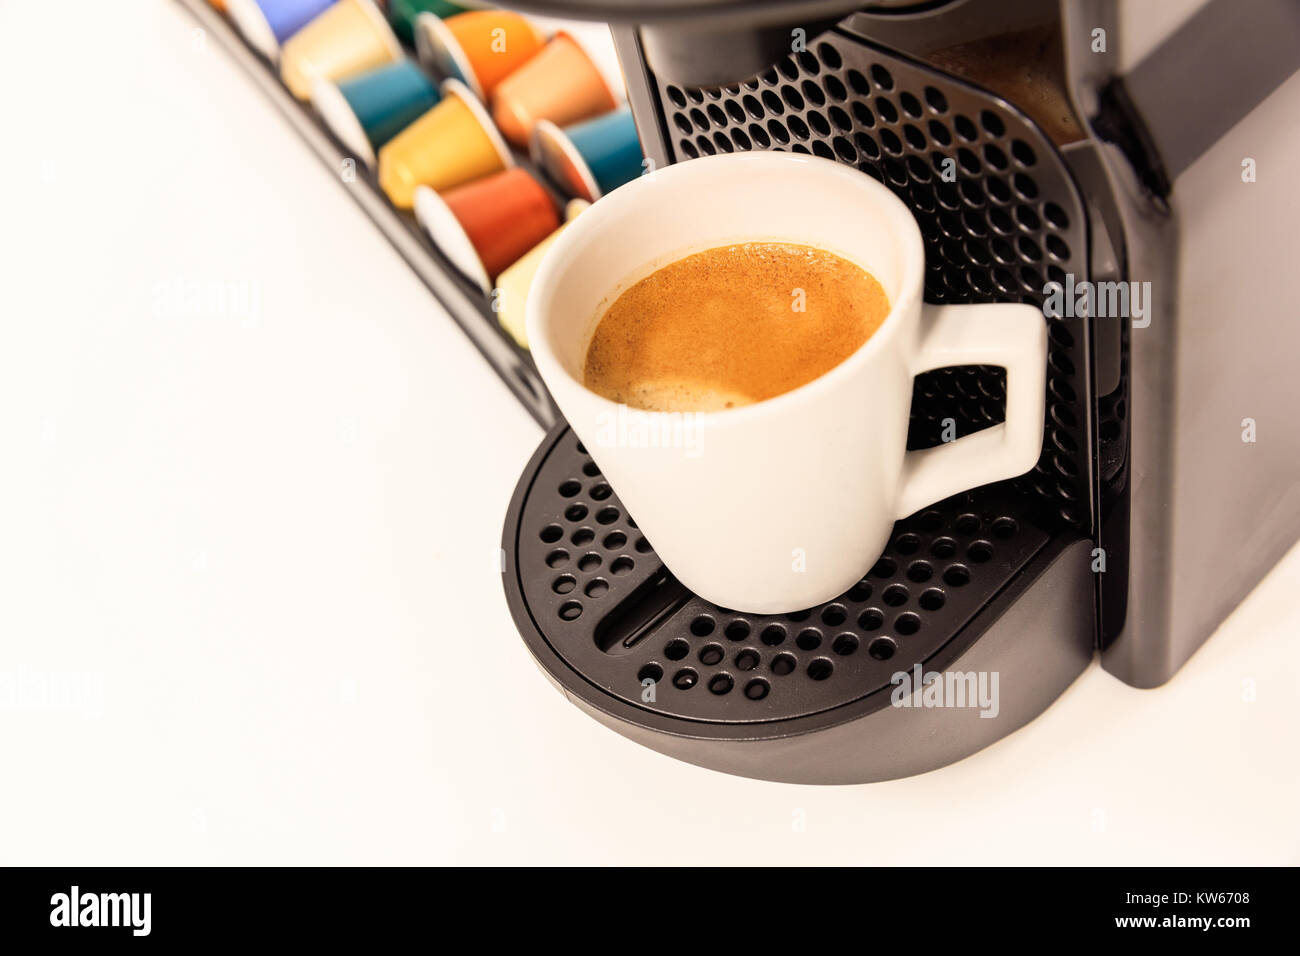 Espresso coffee maker machine. Ready coffee, modern design, capsules near it, closeup view, details. Stock Photo